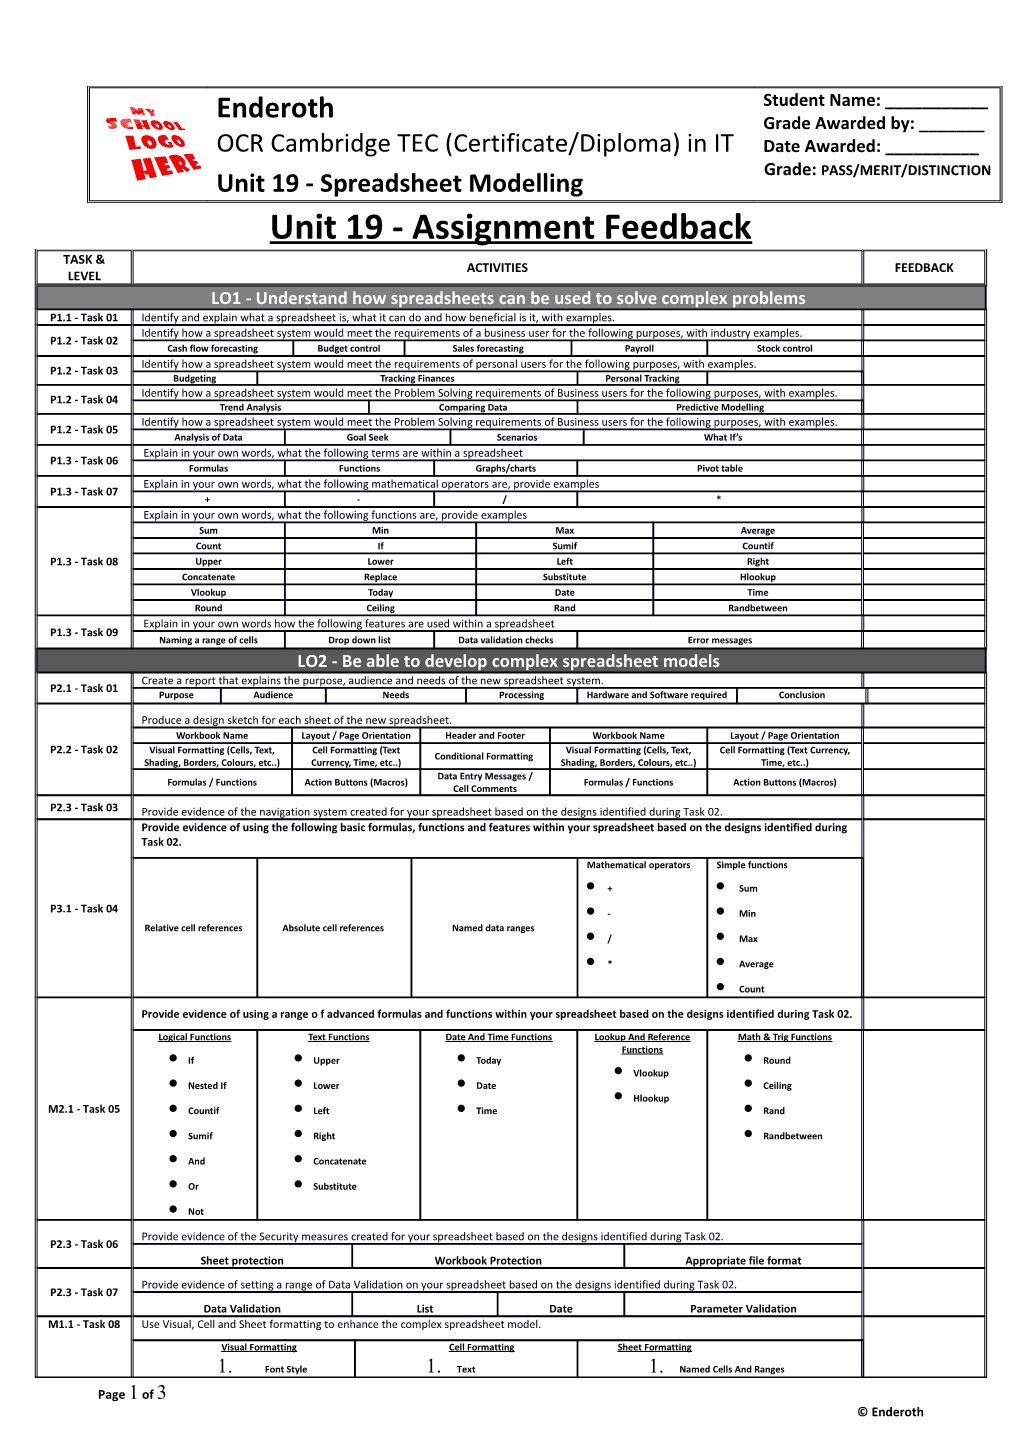 Unit 19 - Assignment Feedback